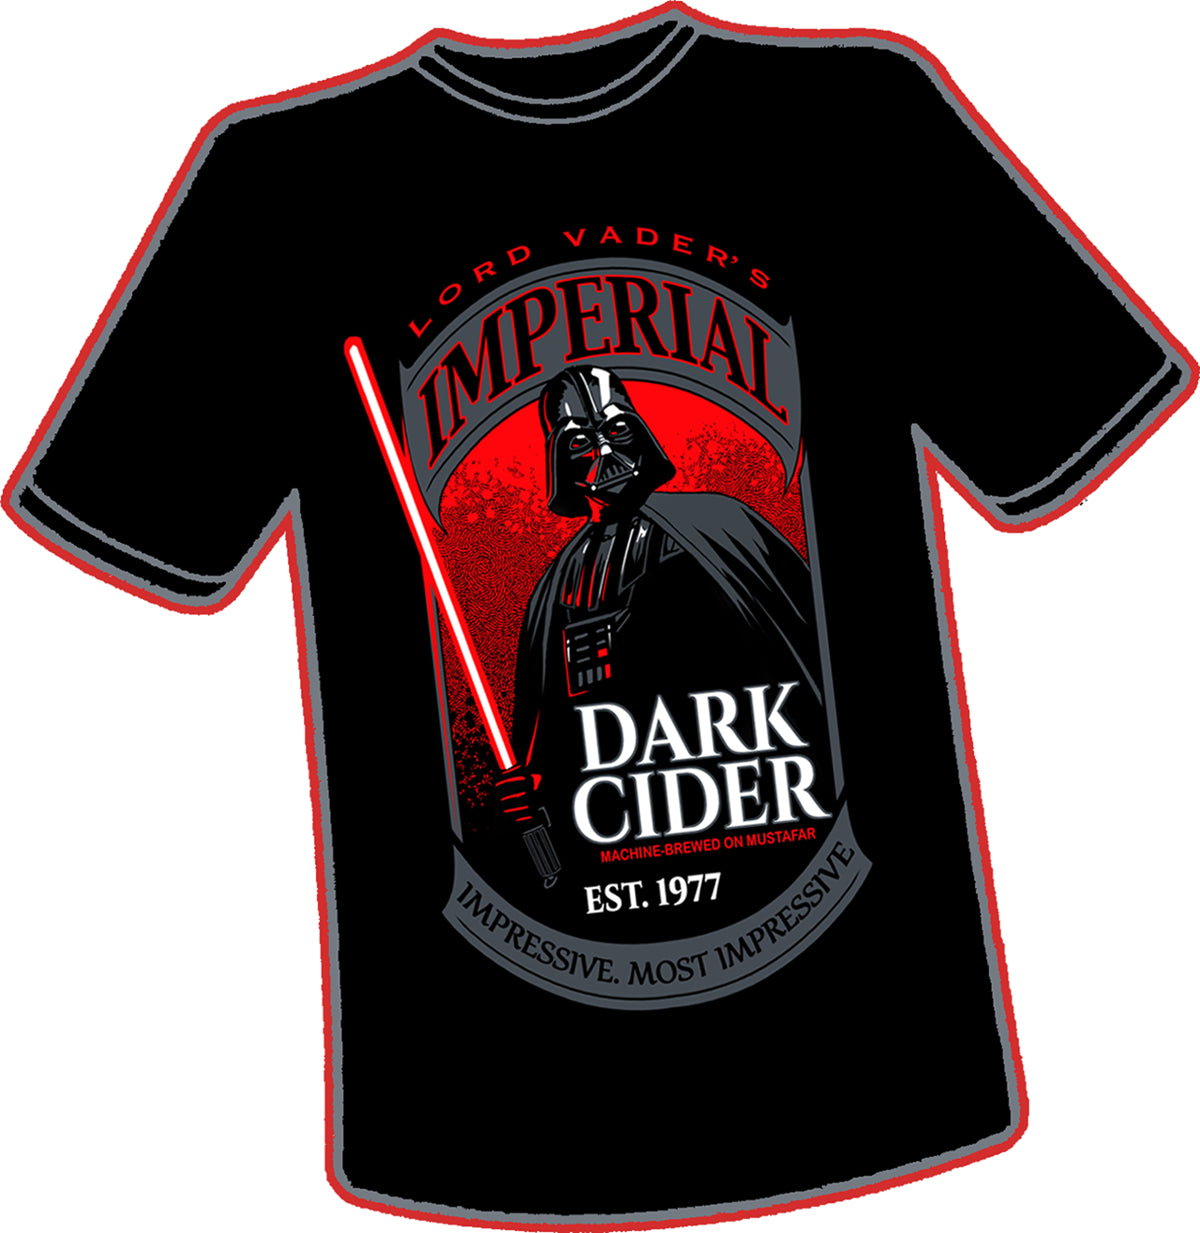 Dark Cider Black T-Shirt Adult Medium